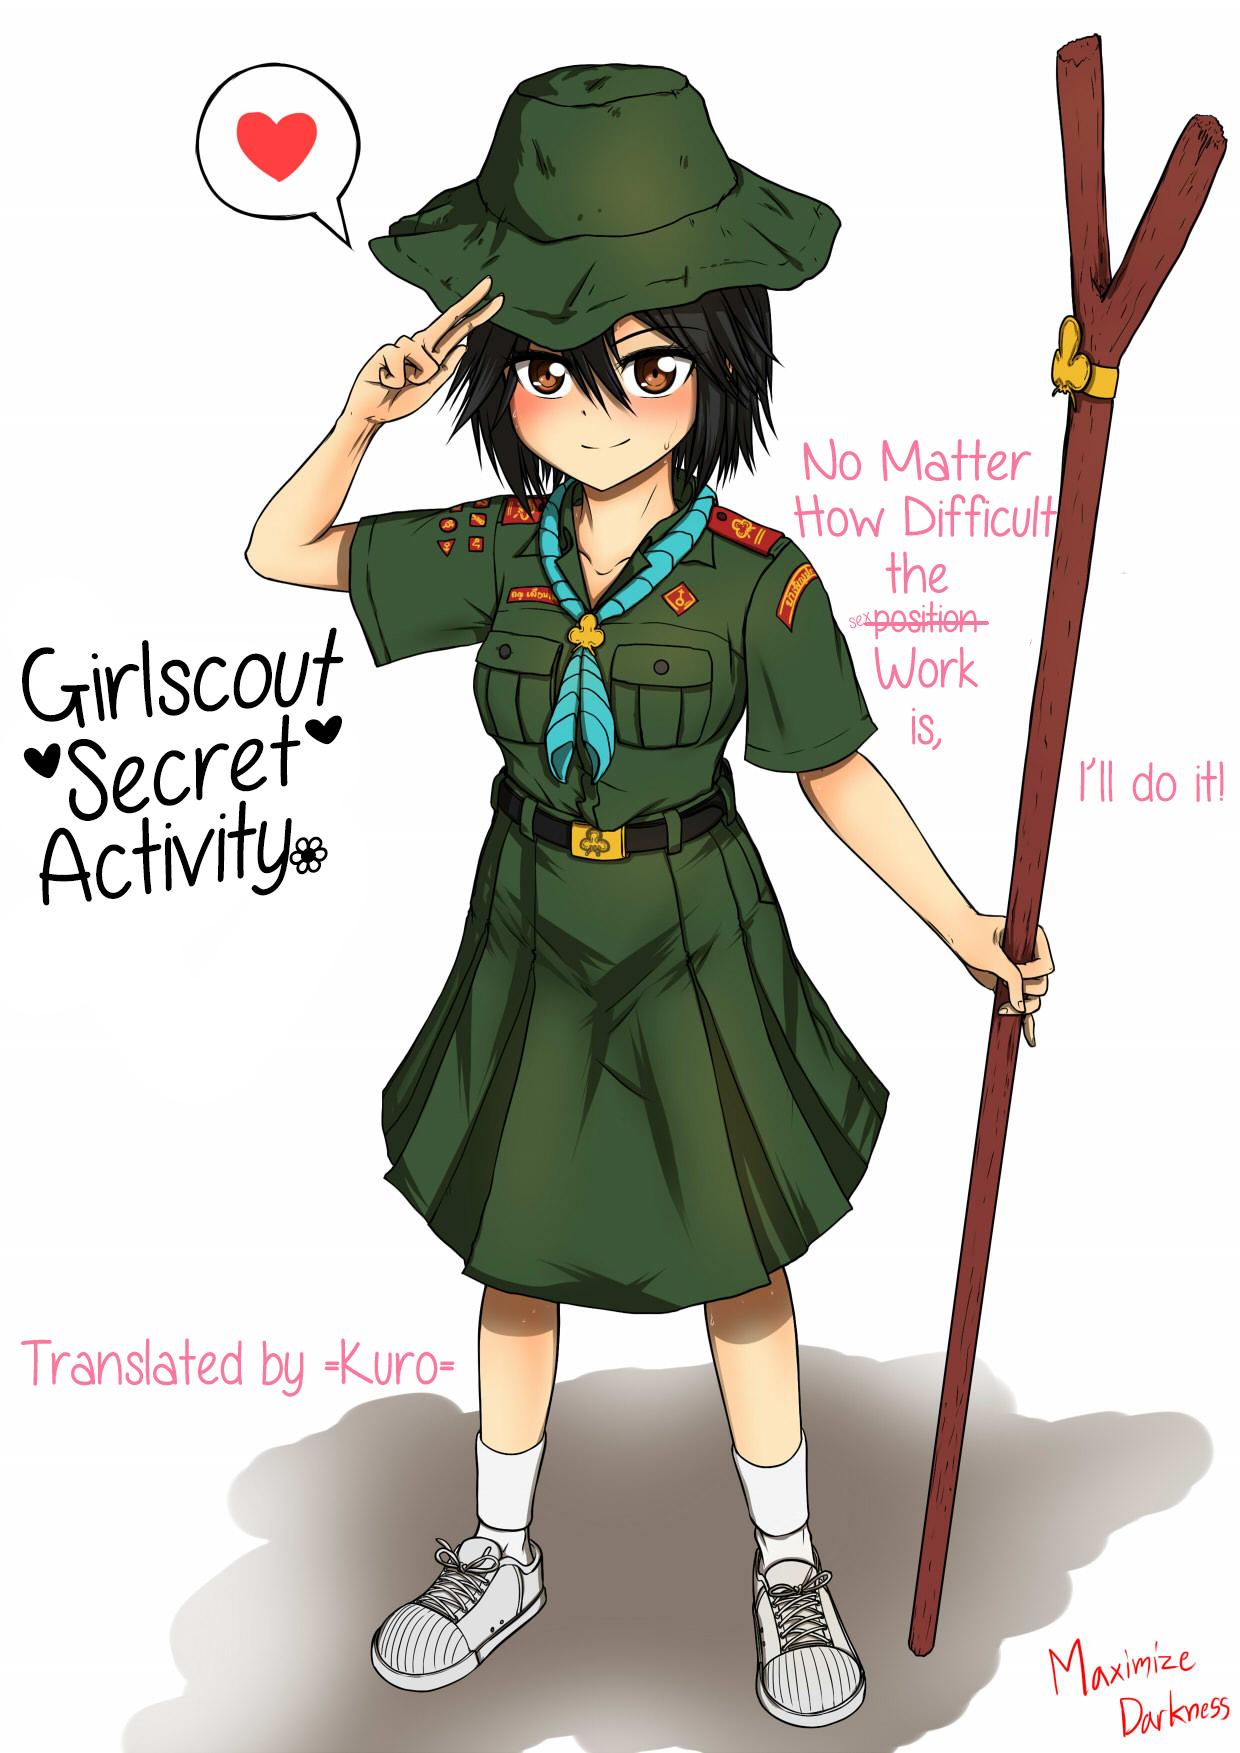 Girlscout secret activity 0